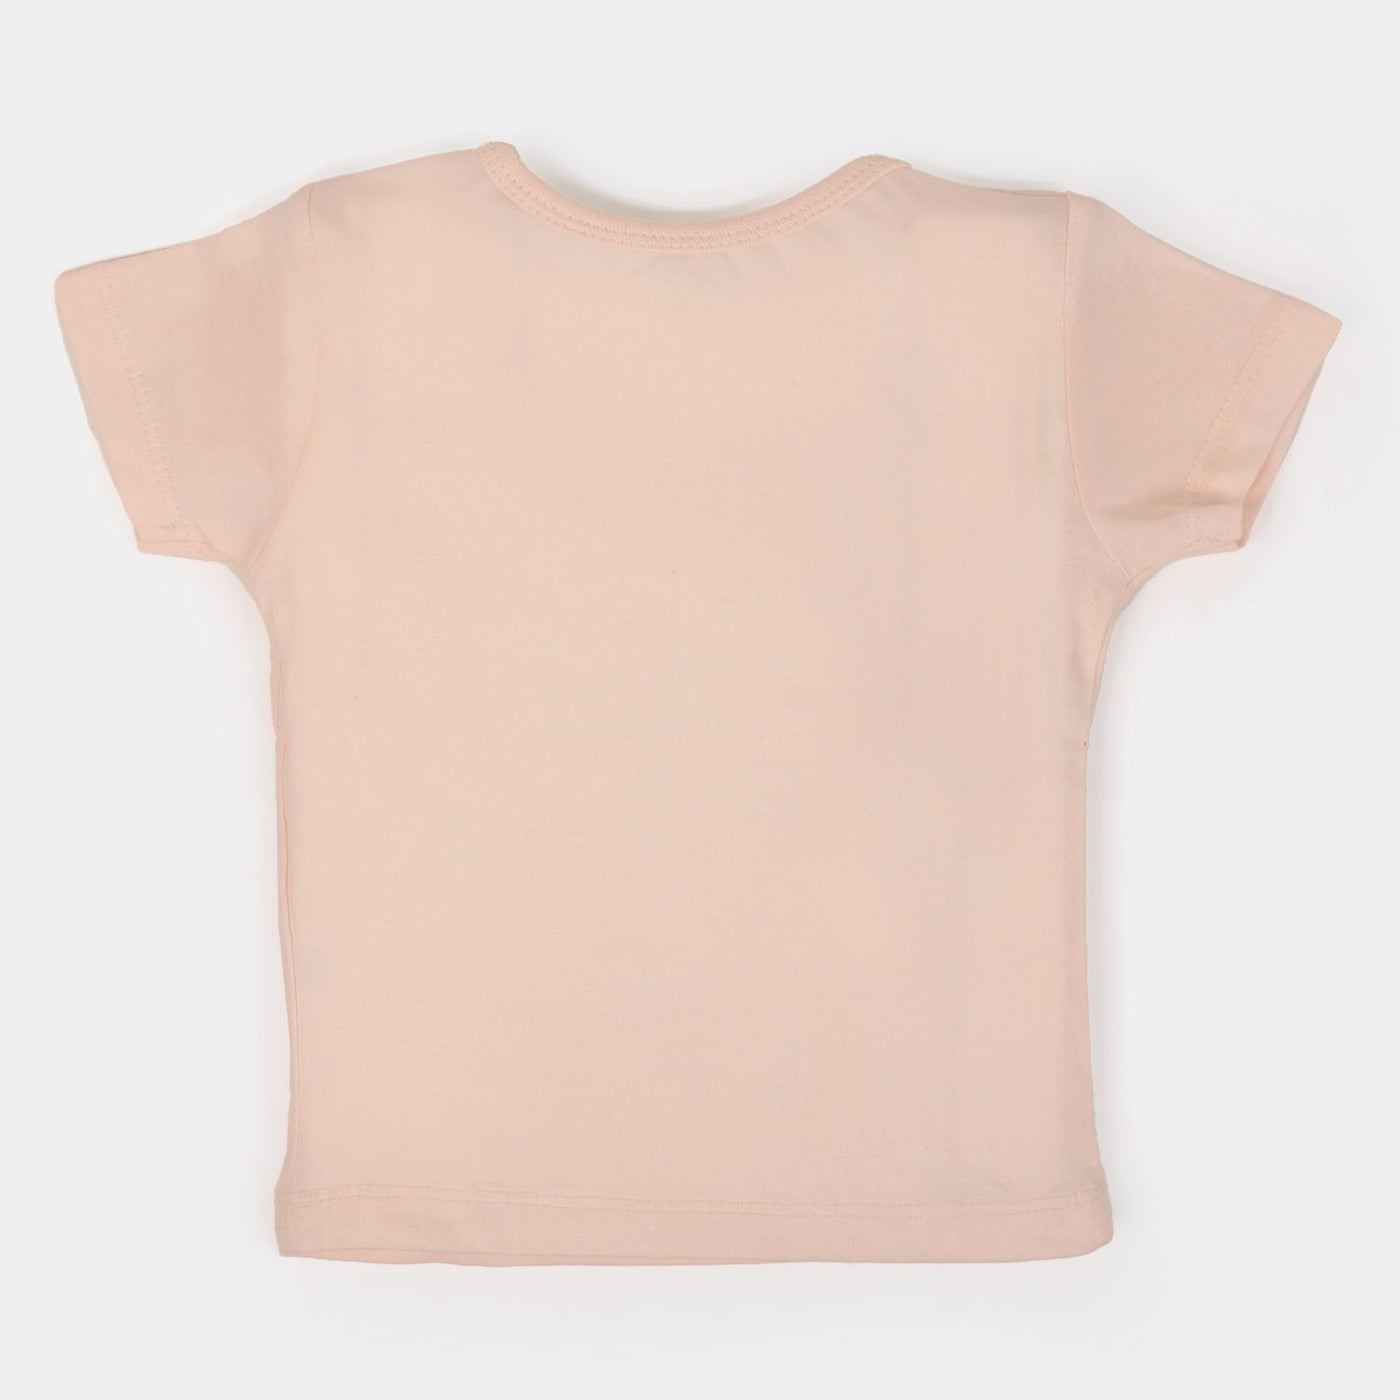 Infant Boys Cotton T-Shirt Character - Peach